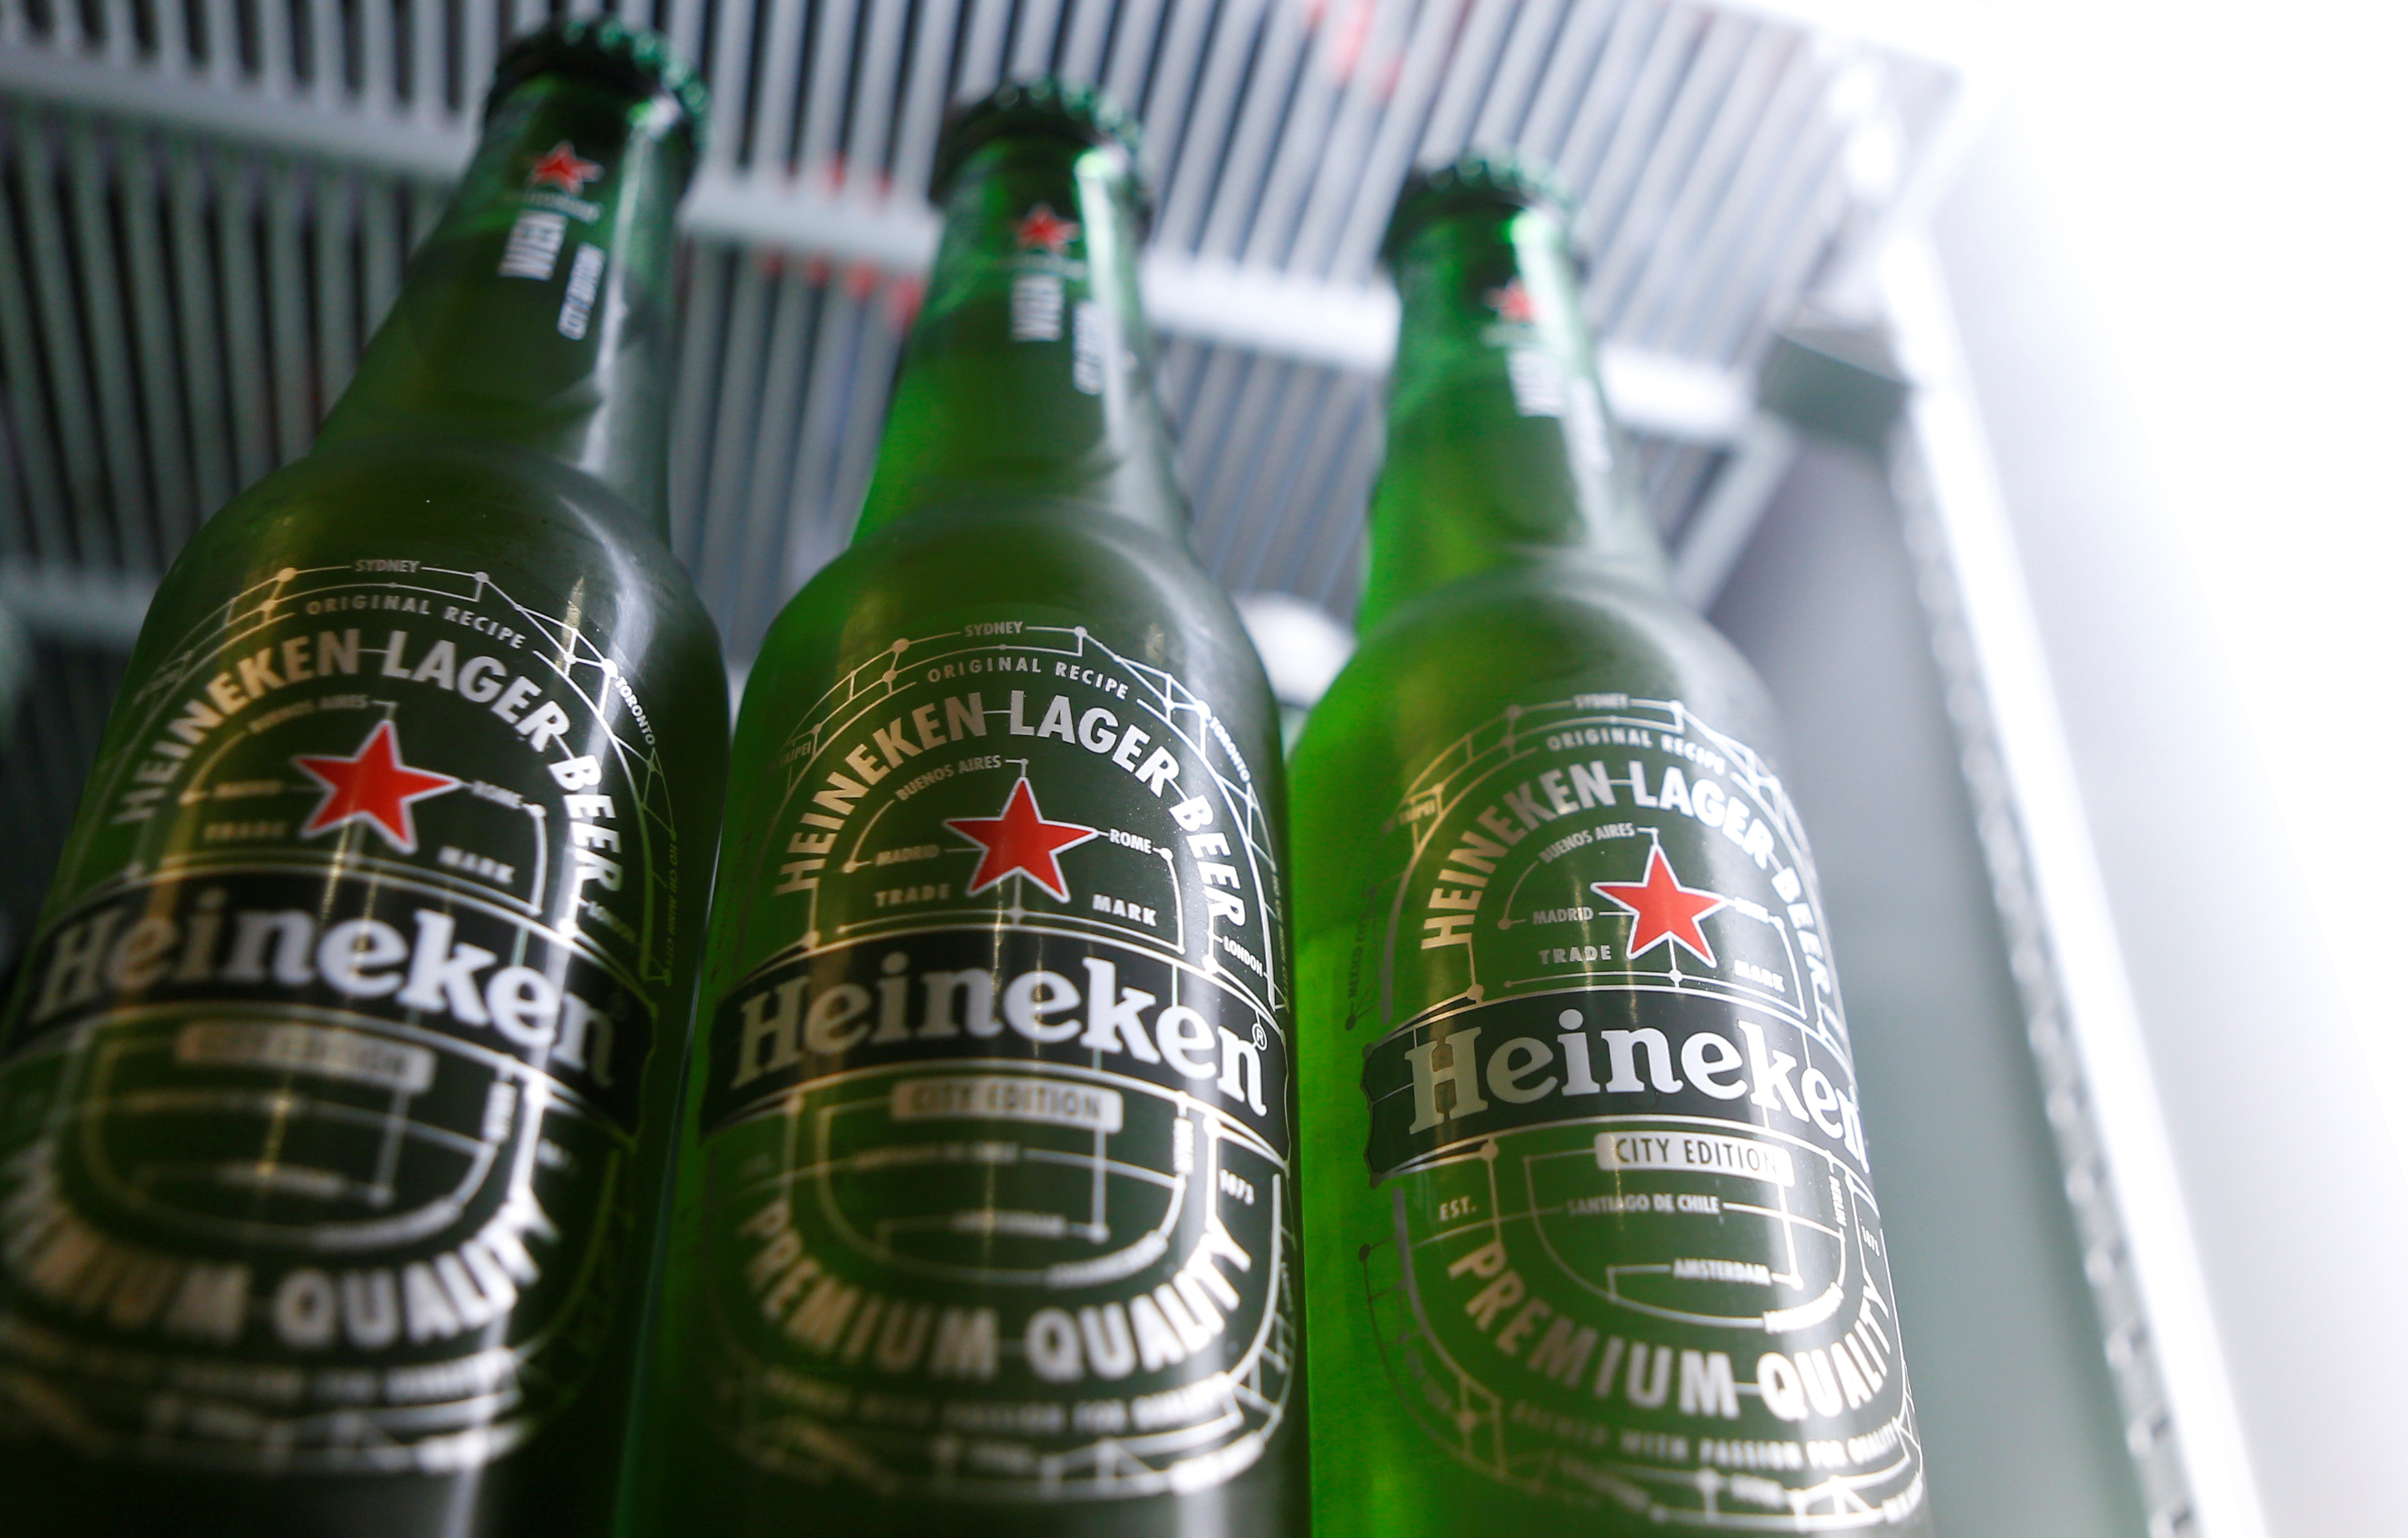 Heineken's pricing goof has a strategic spillover